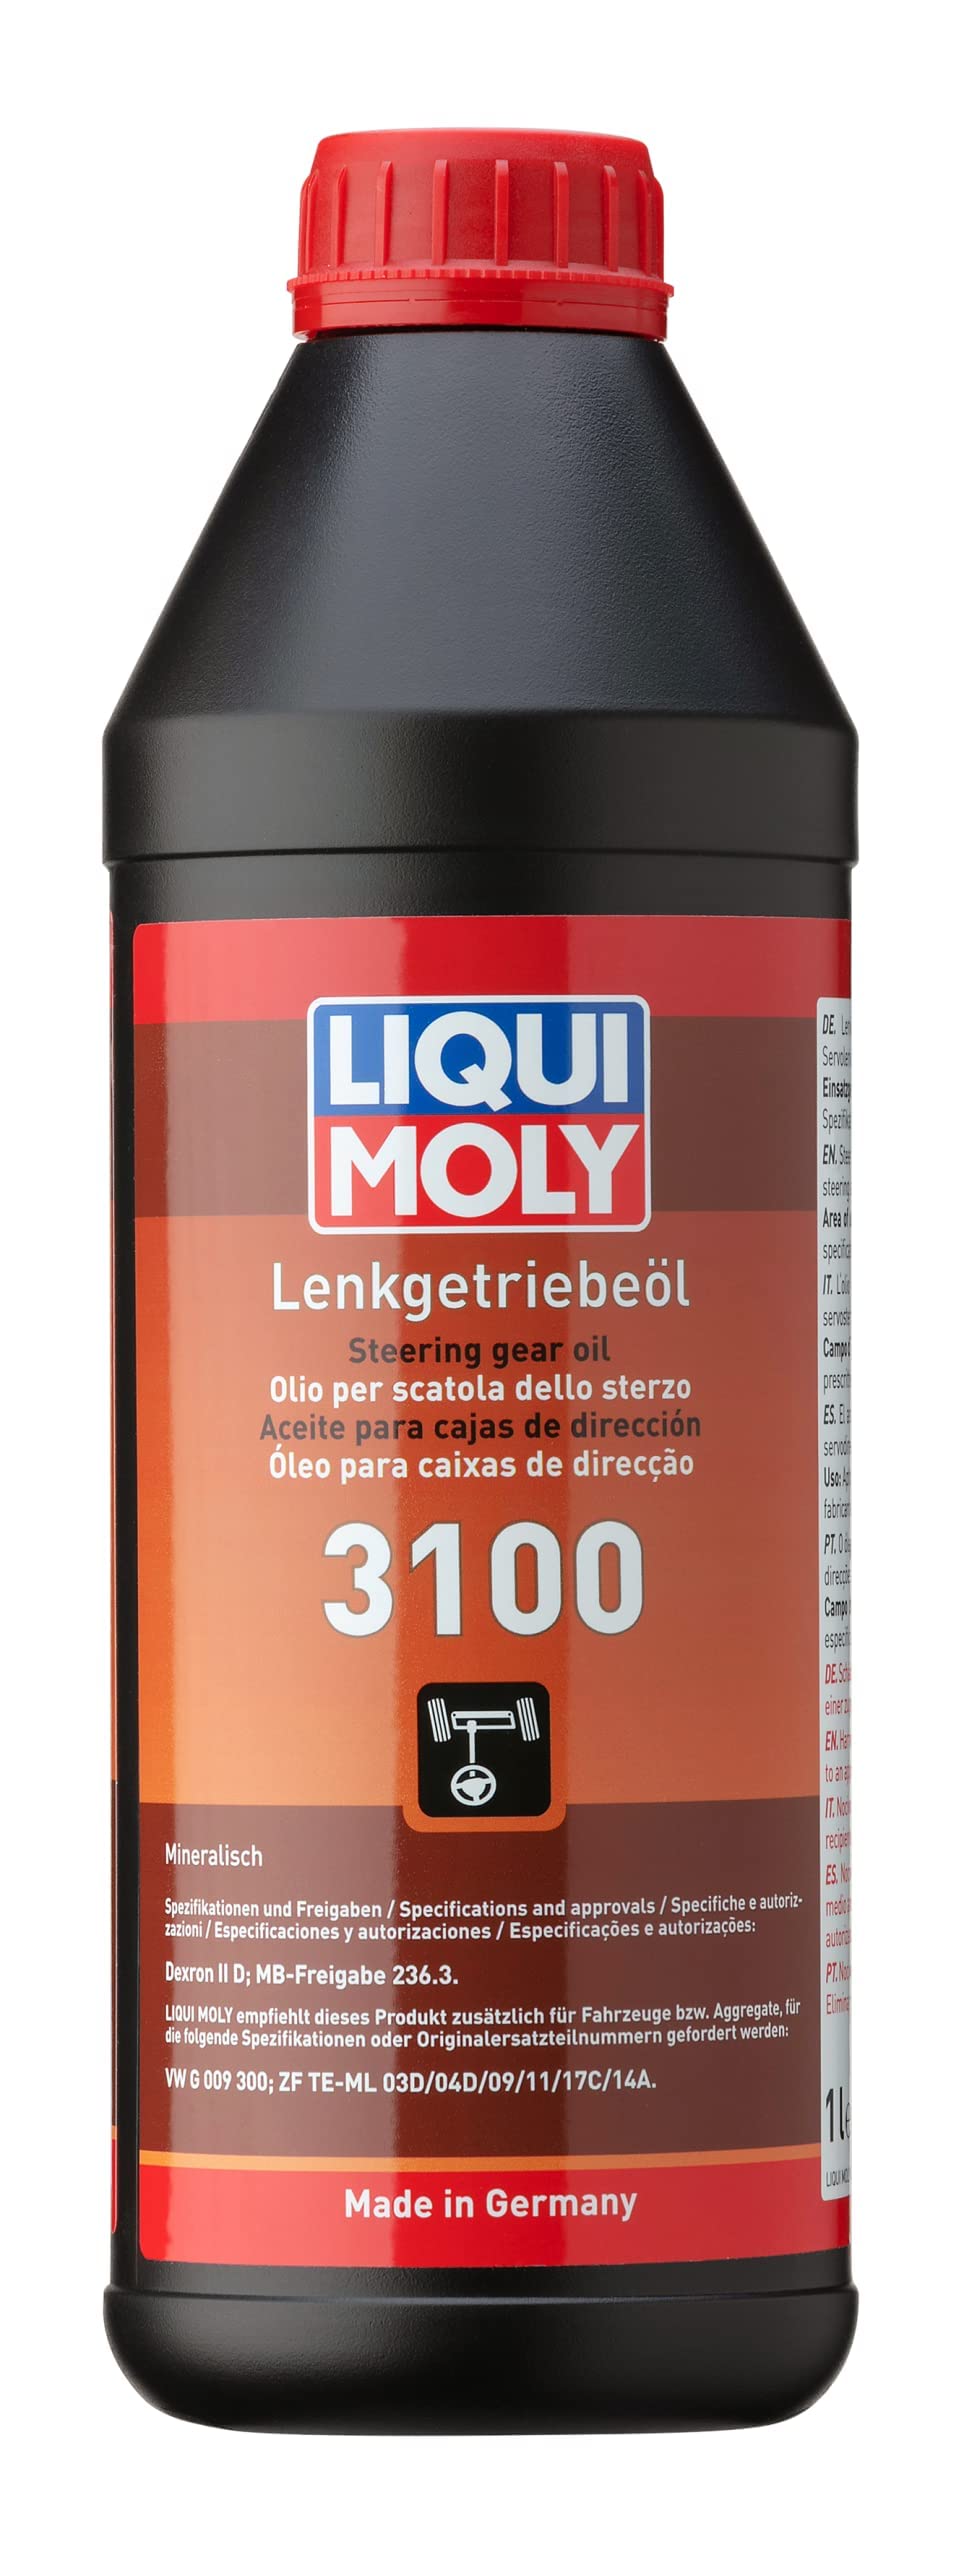 LIQUI MOLY 1145 Lenkgetriebeöl 3100 1 l von Liqui Moly